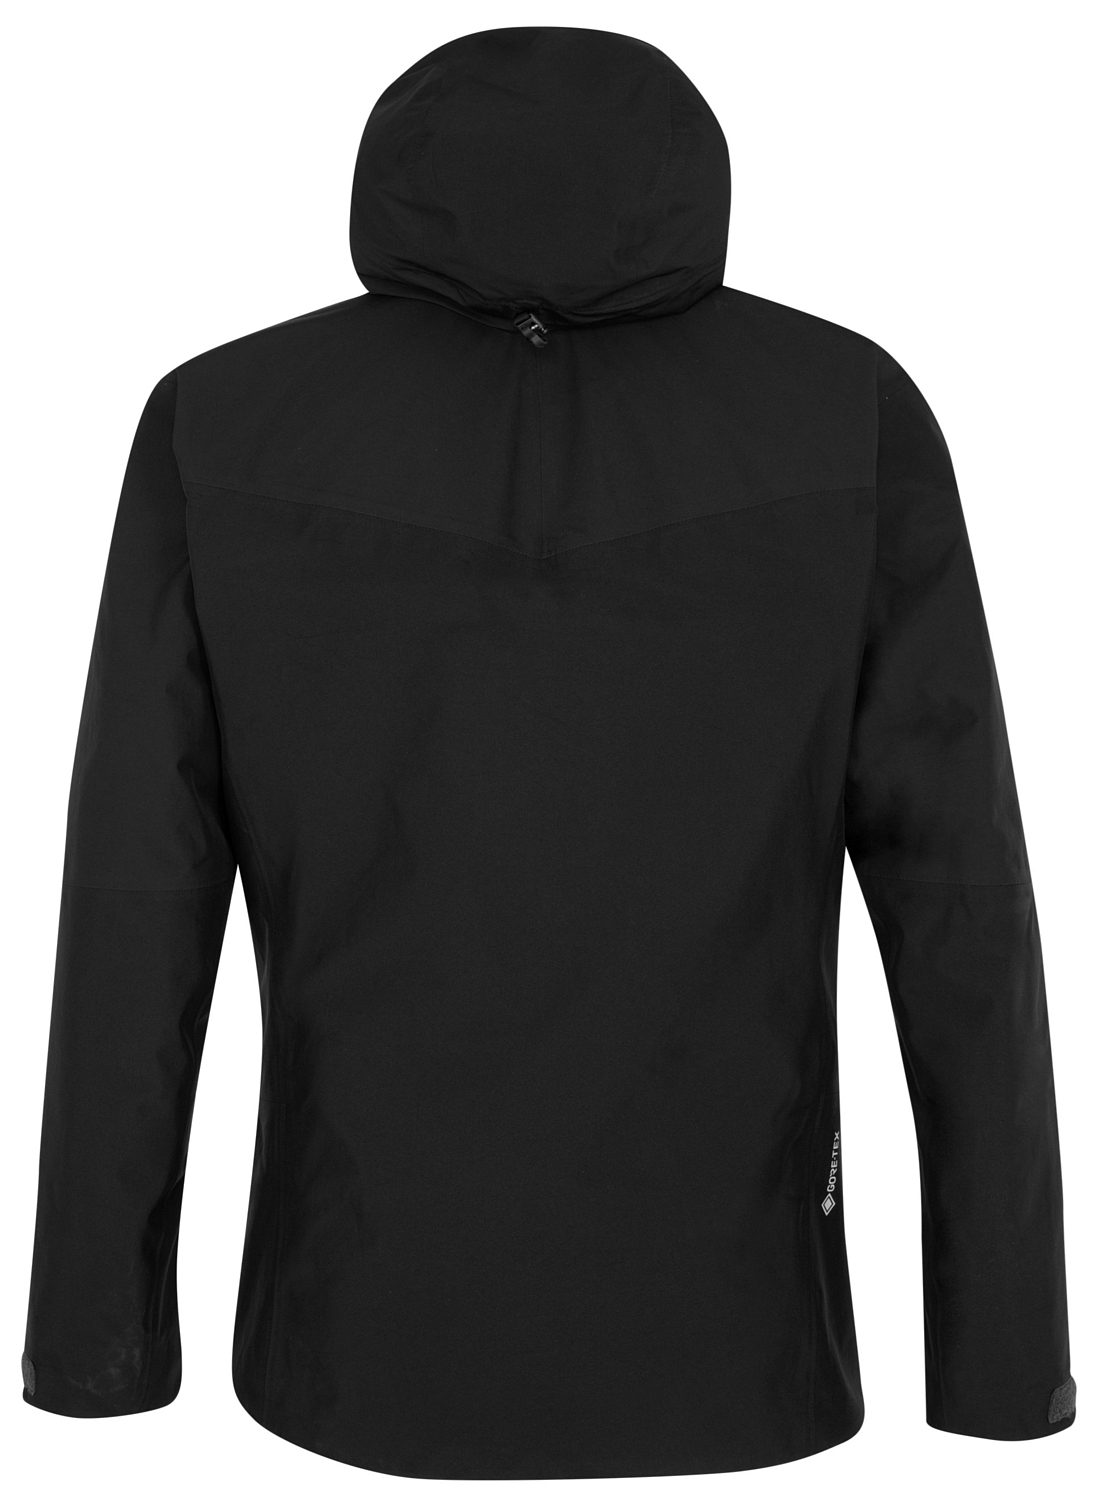 Куртка для активного отдыха Salewa 2020-21 Stelvio Gore-Tex Hardshell Convertible Black Out